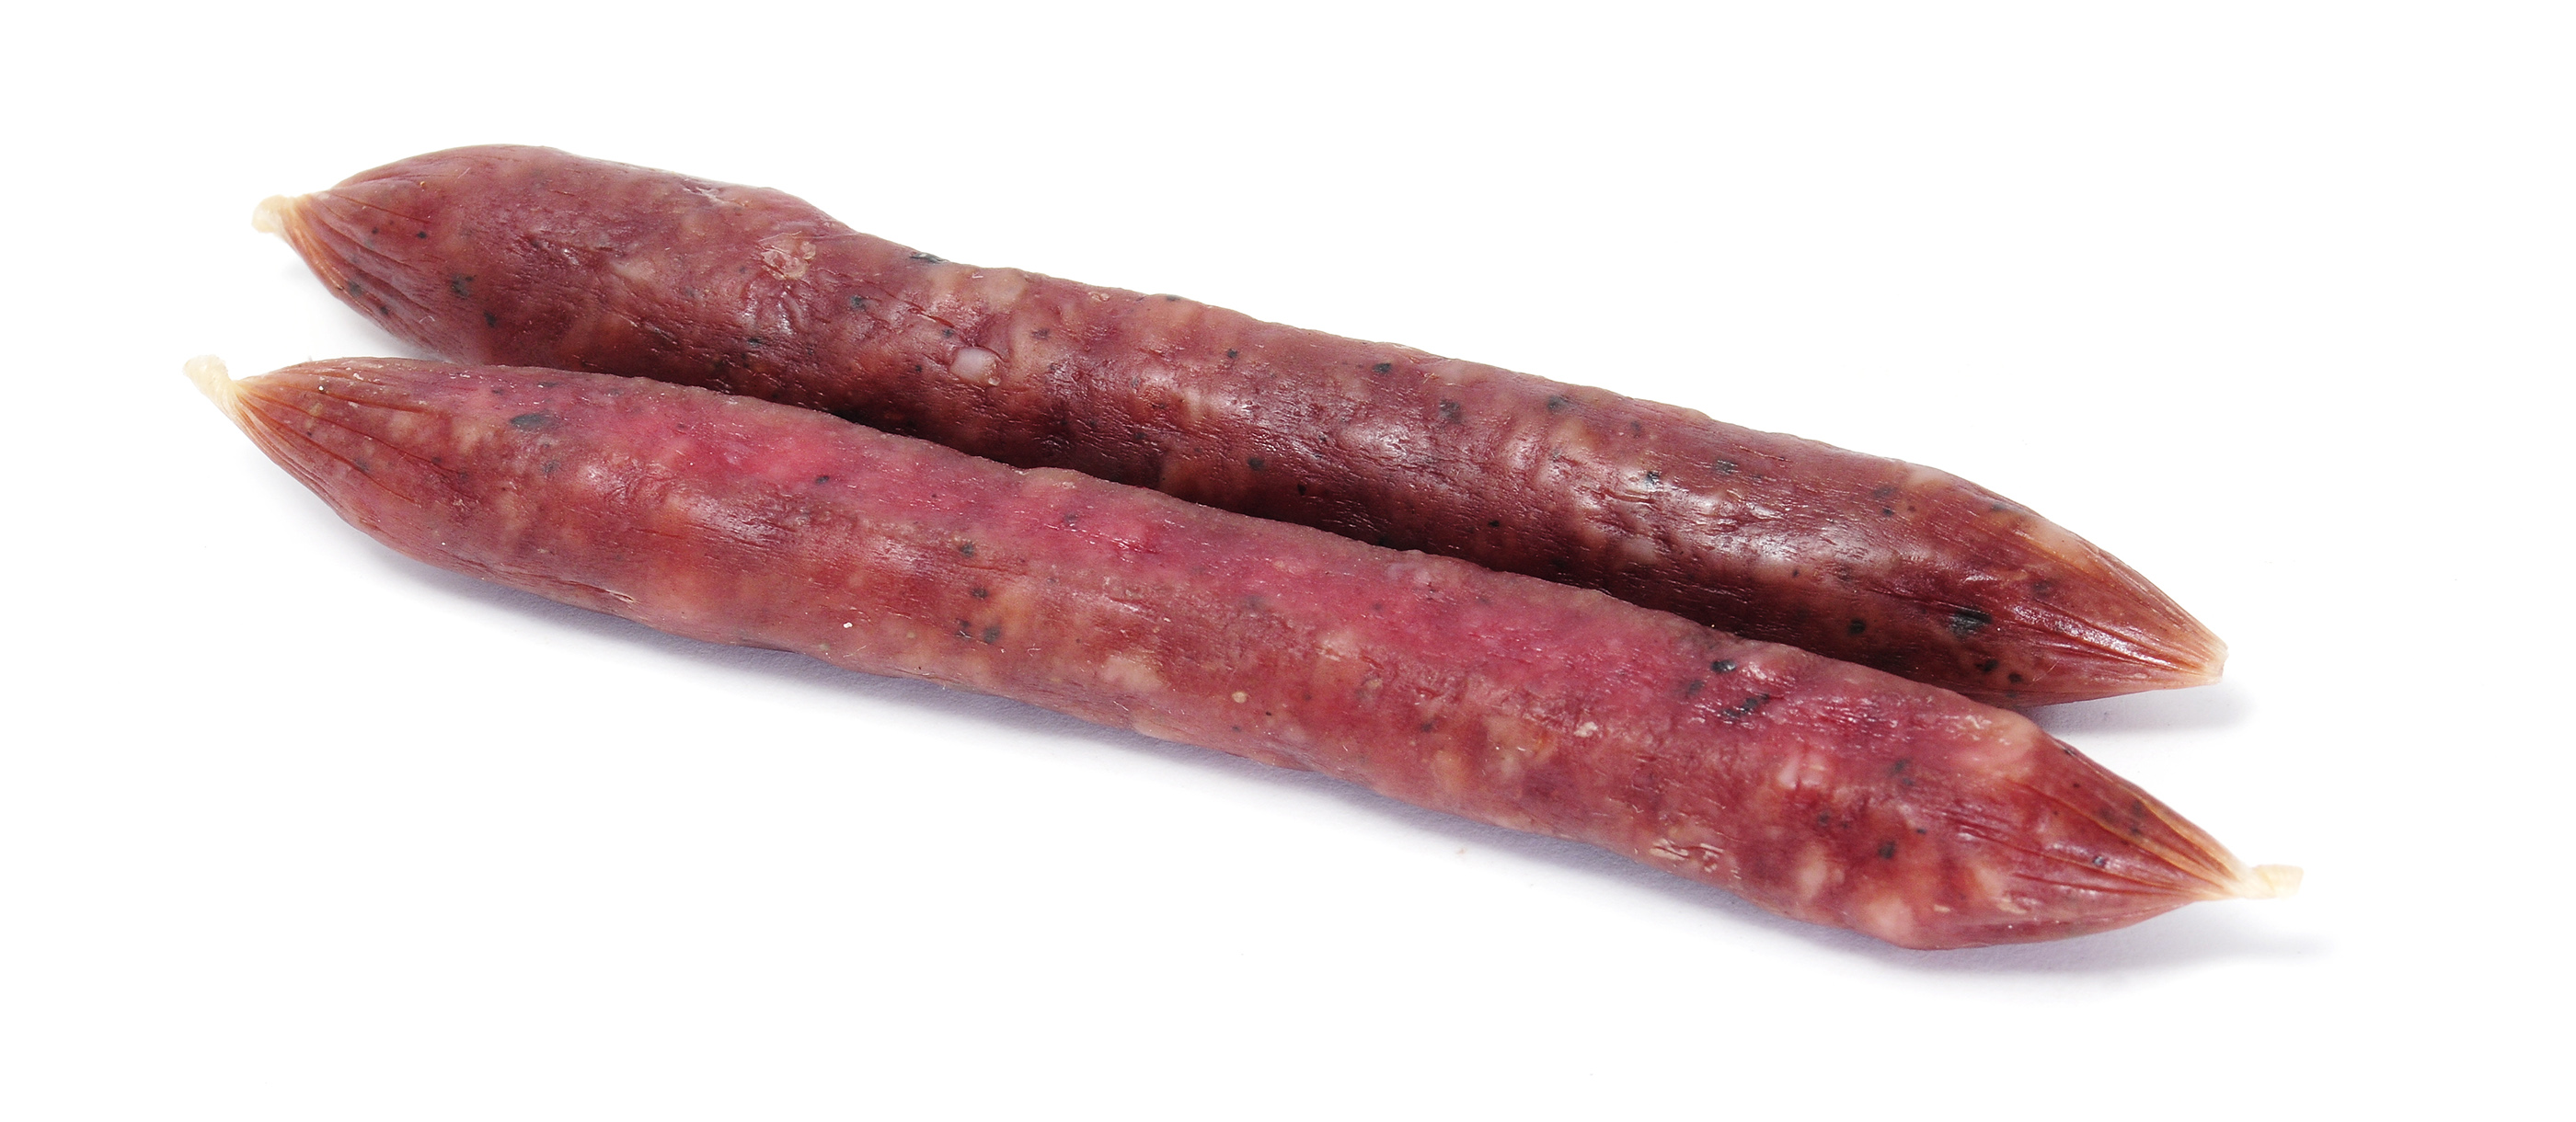 Longaniza | Traditional Sausage From Spain